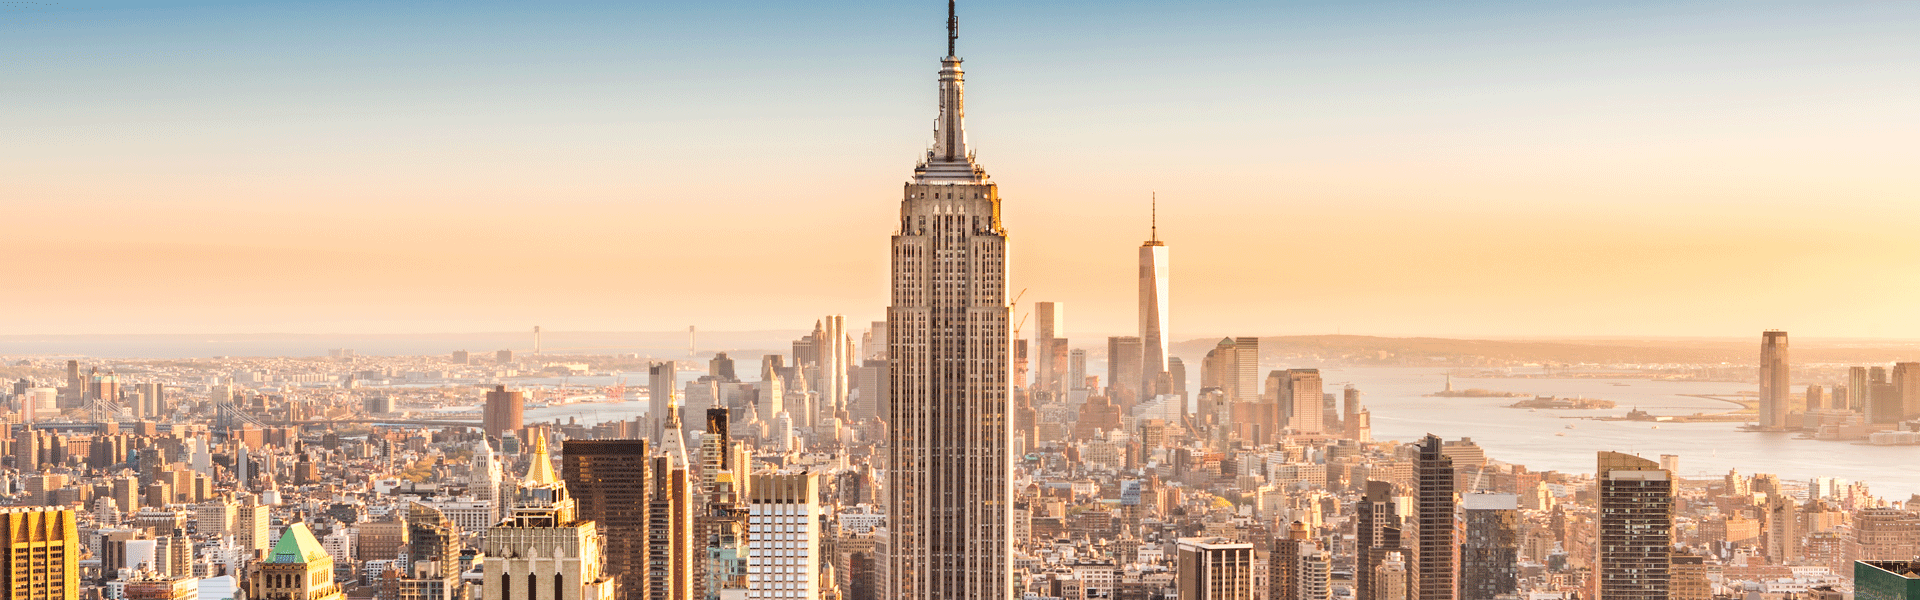 New York City skyline conceptualizing SAP Gallery of Purpose public art